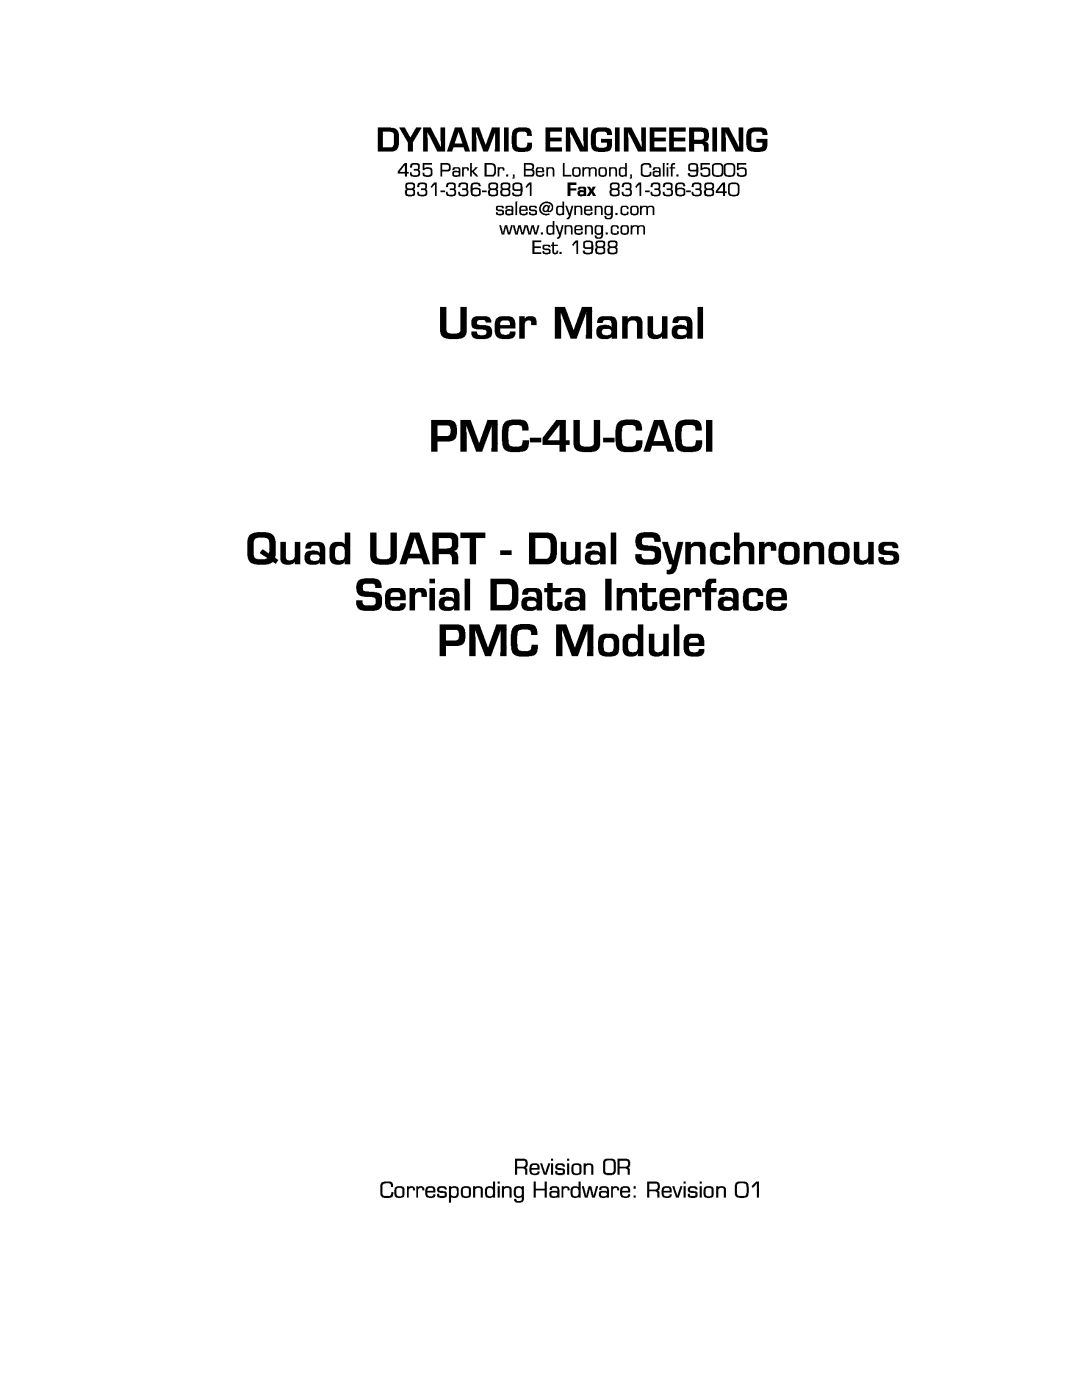 American Dynamics user manual Dynamic Engineering, User Manual PMC-4U-CACI Quad UART - Dual Synchronous 